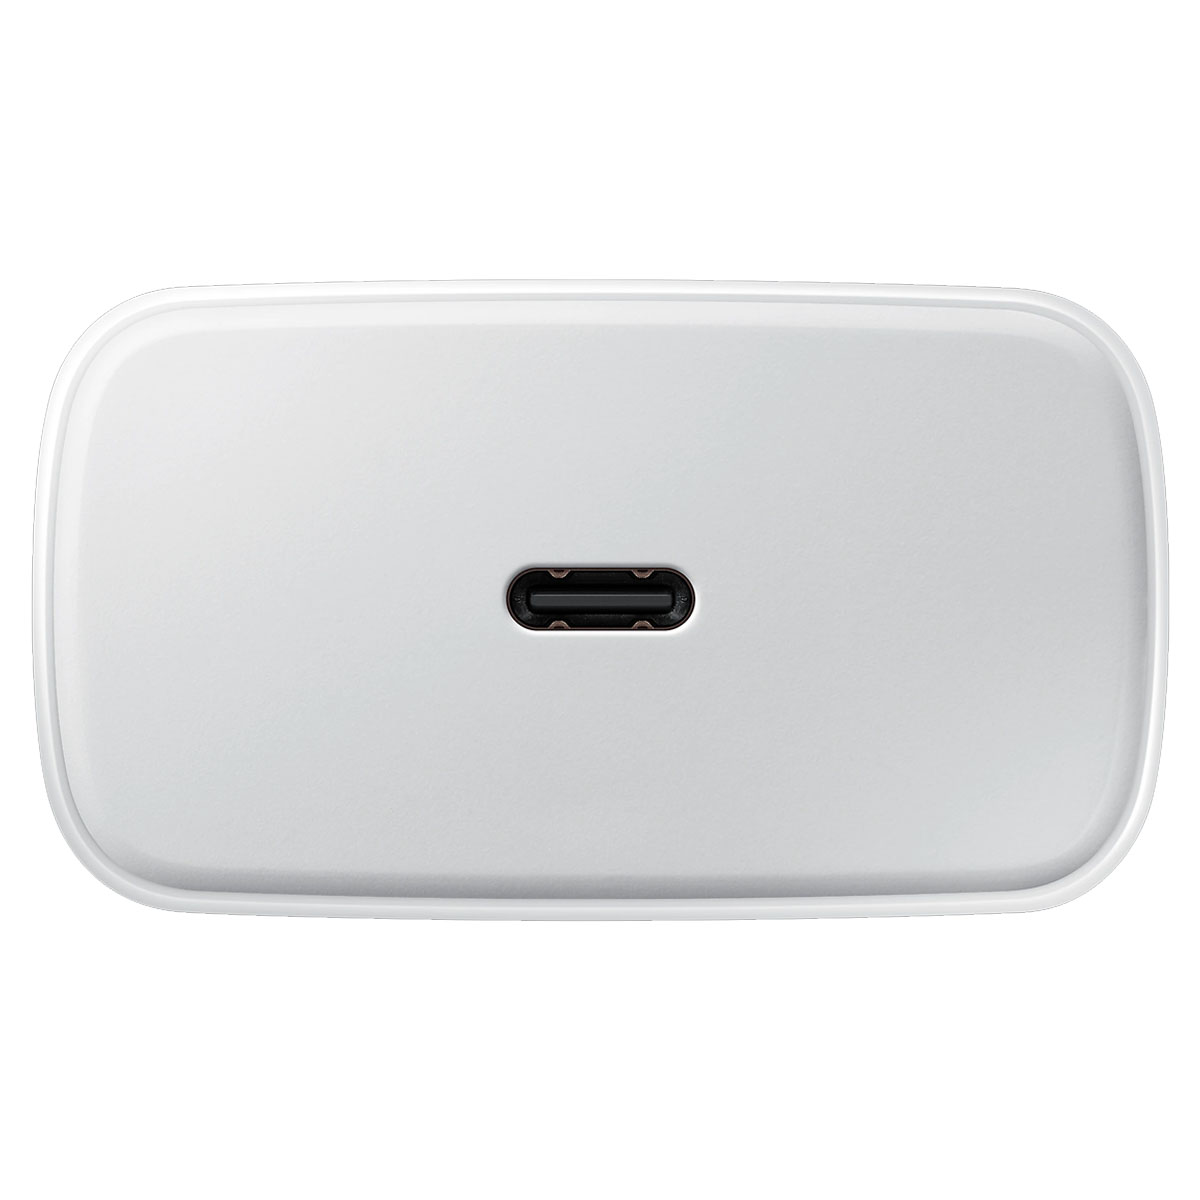 СЗУ (Сетевое зарядное устройство) EP-TA845, 45W, 1 USB Type C, цвет белый